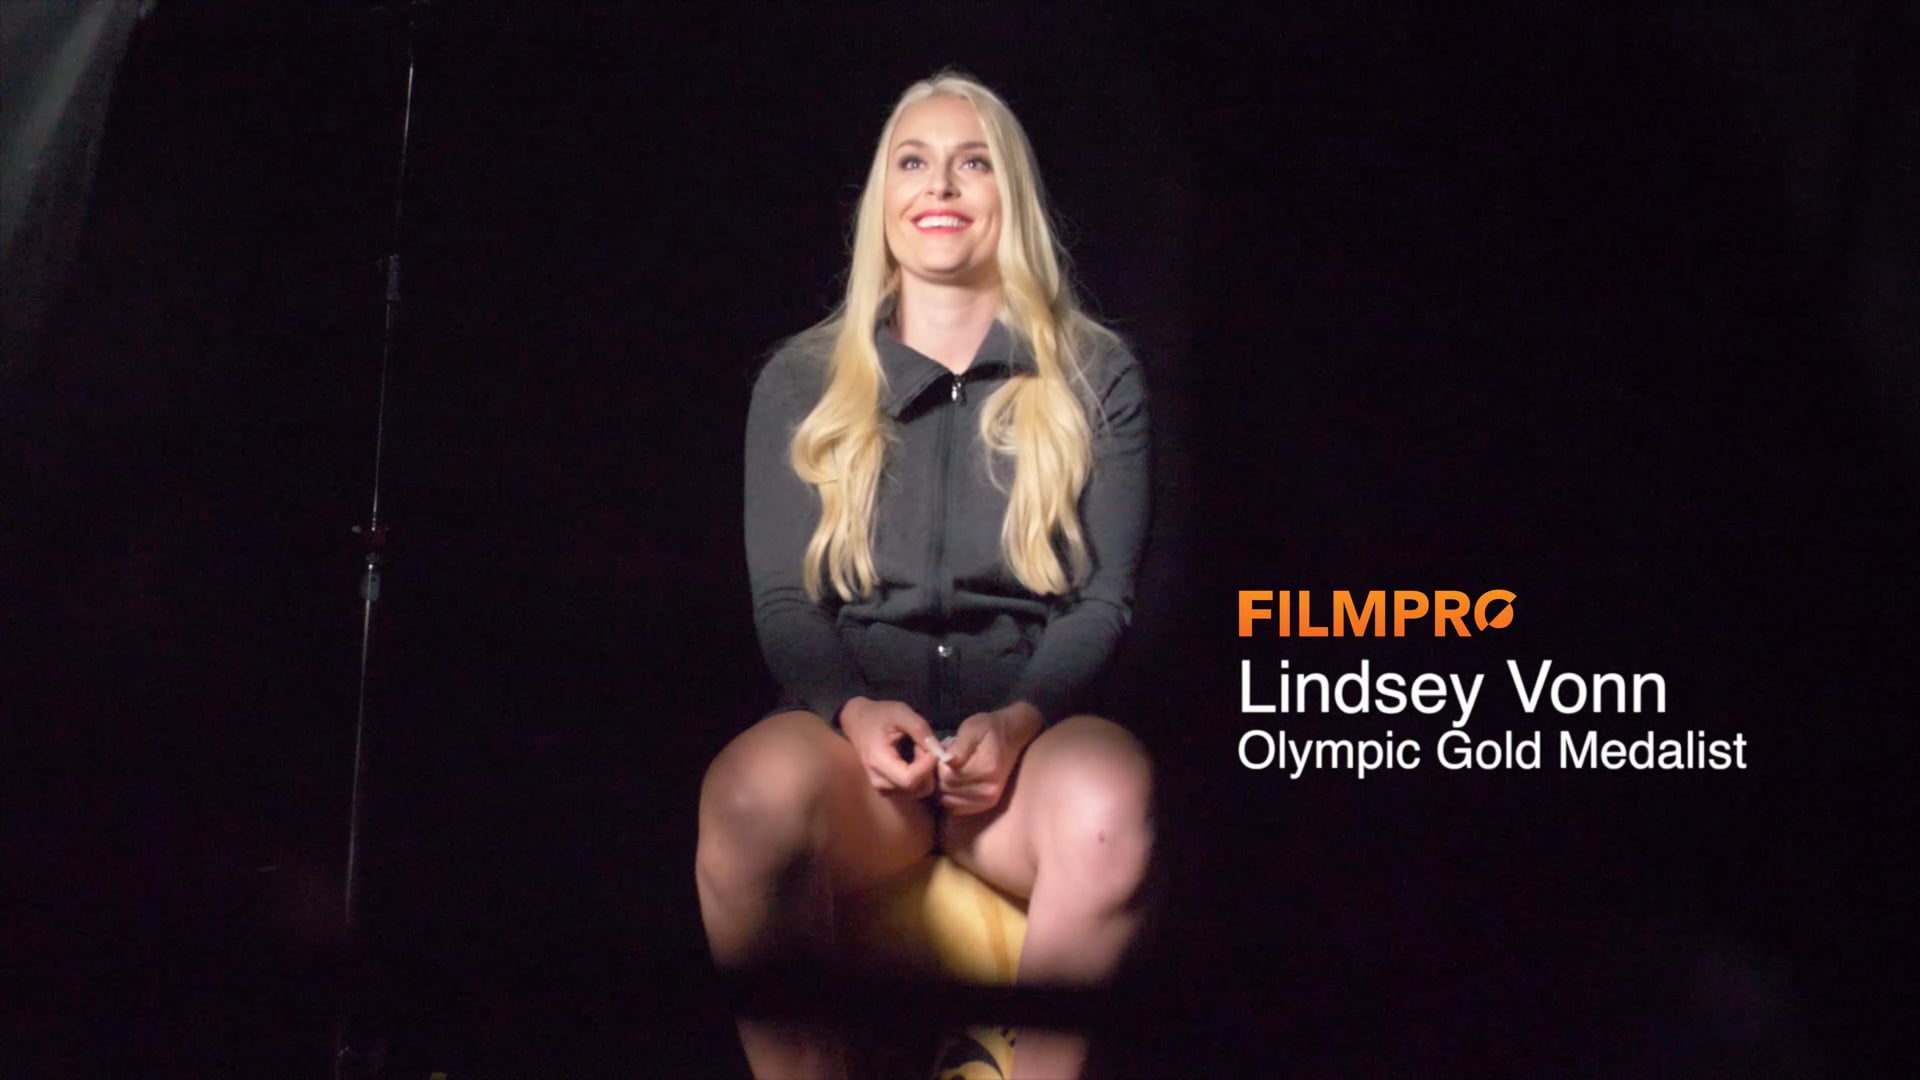 Lindsey Vonn and Film Pro